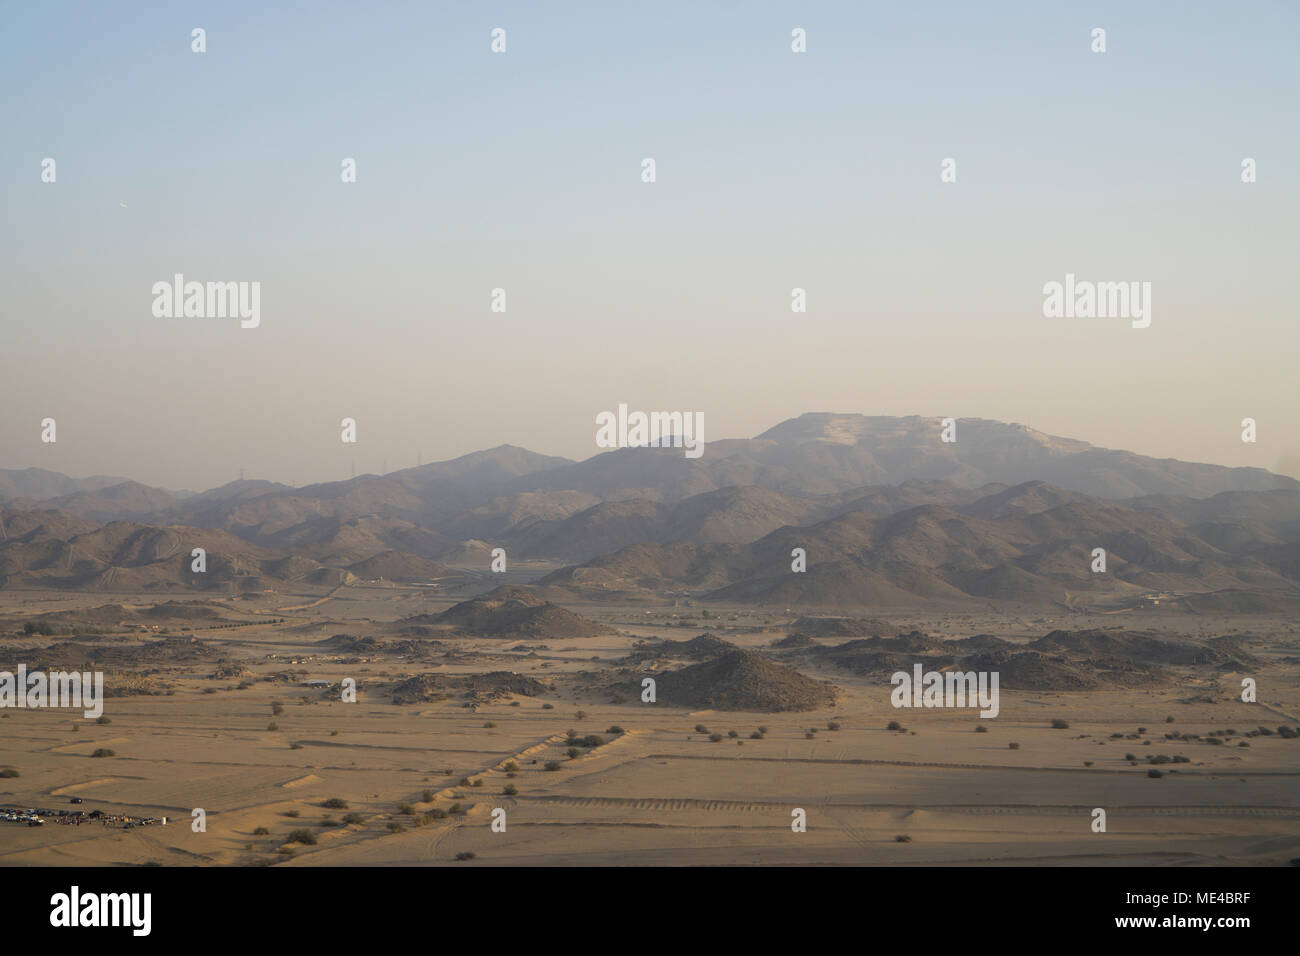 Desert scene in Asfan Saudi Arabia Stock Photo